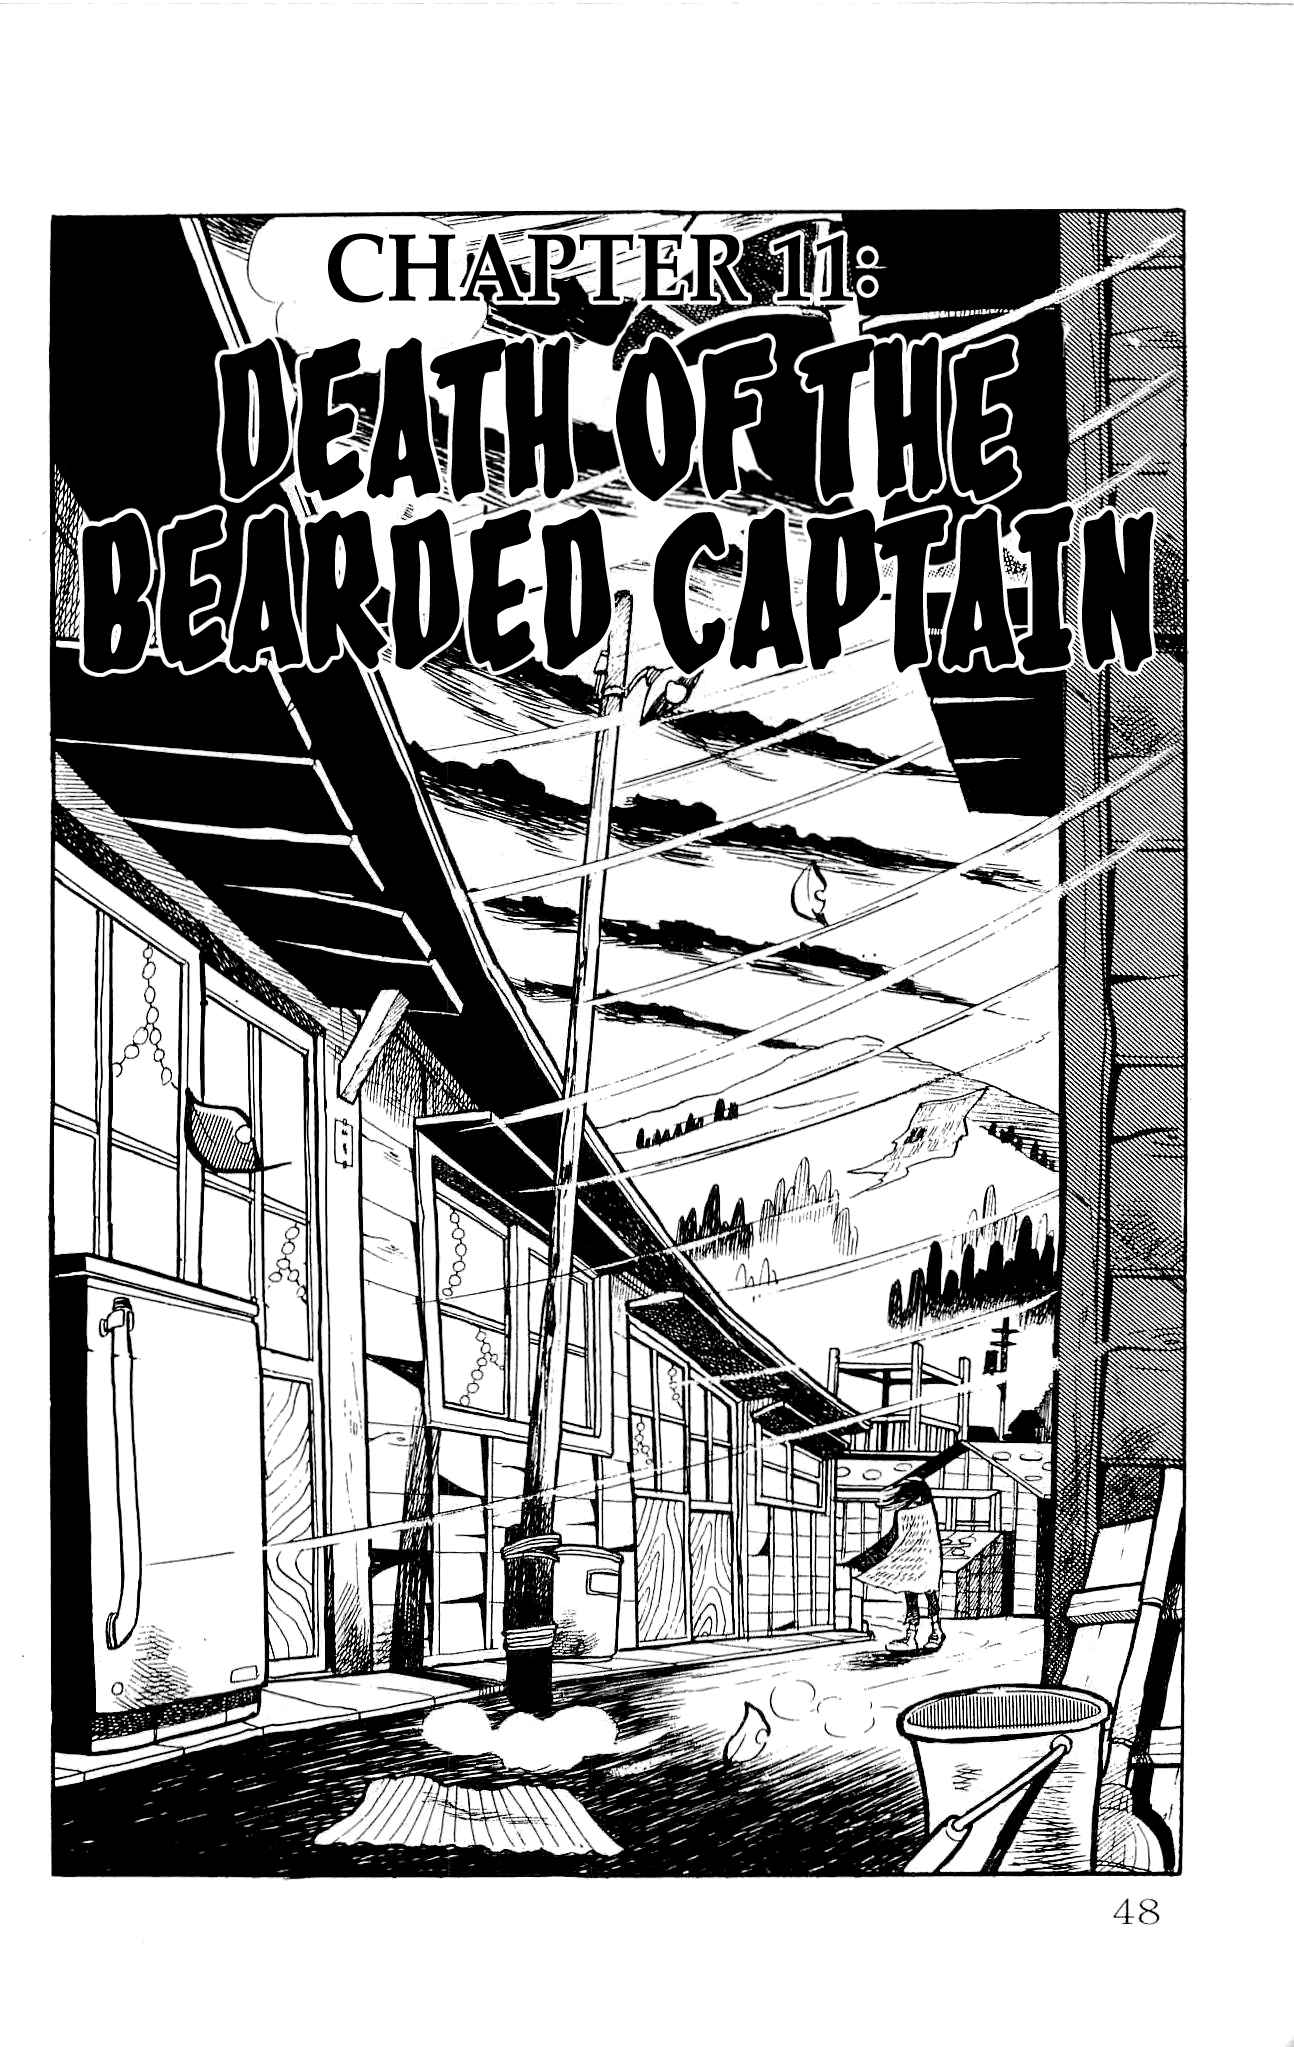 Zenikko Vol. 3 Ch. 11 Death of the Bearded Captain